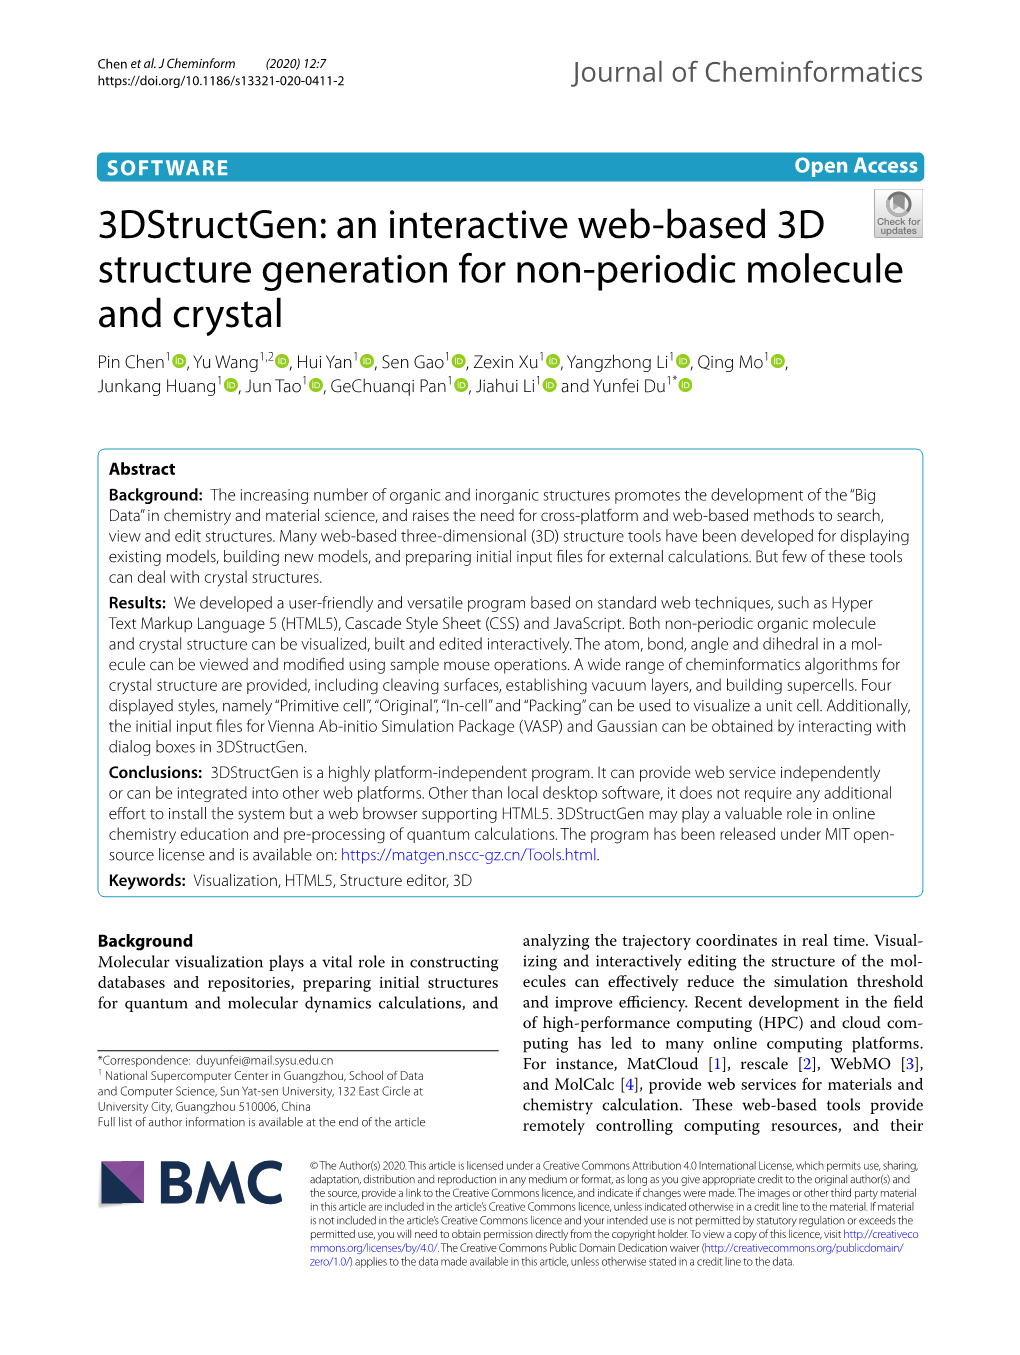 3Dstructgen: an Interactive Web-Based 3D Structure Generation